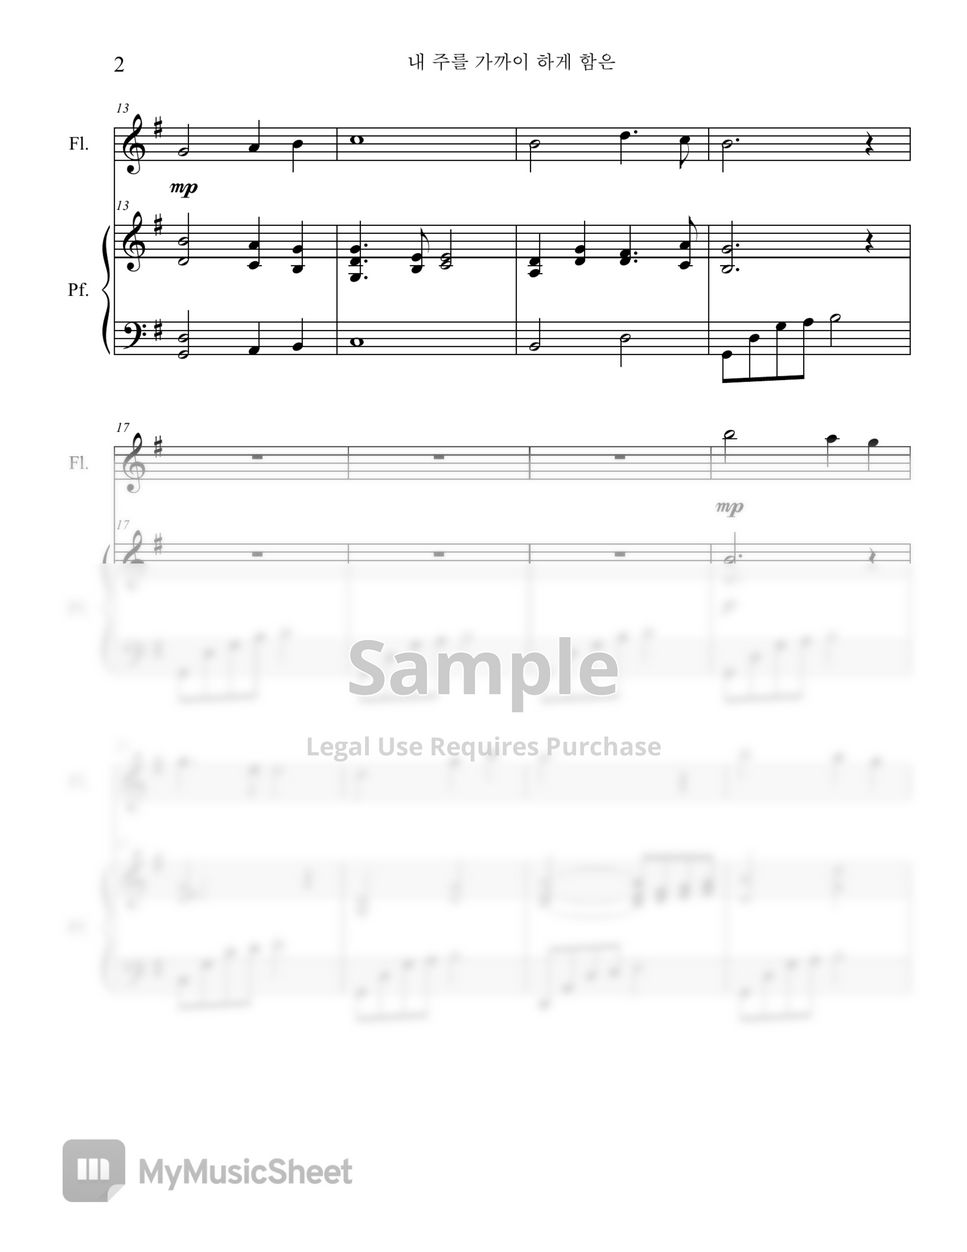 L.Mason - Nearer, my God, toThee (Hymn with J.S.Bach) by Pianist Jin